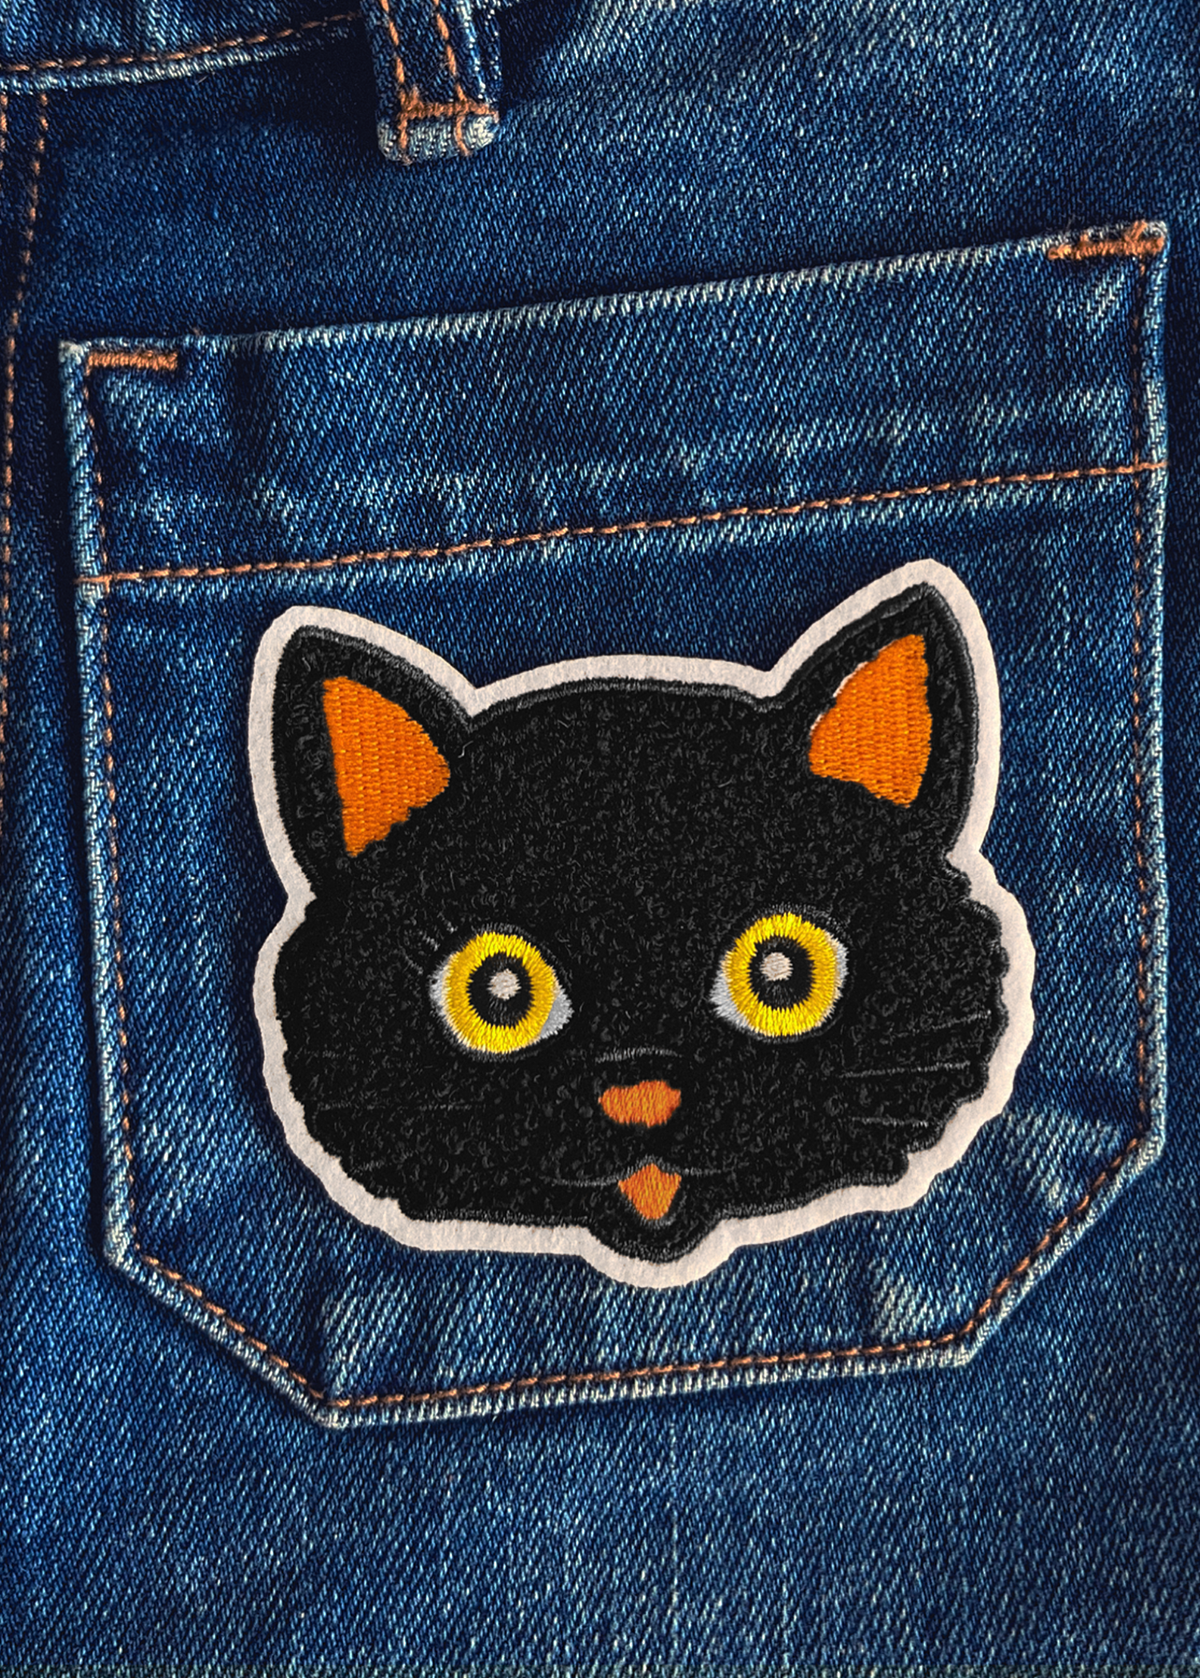 Fuzzy Black Cat Iron-On Patch